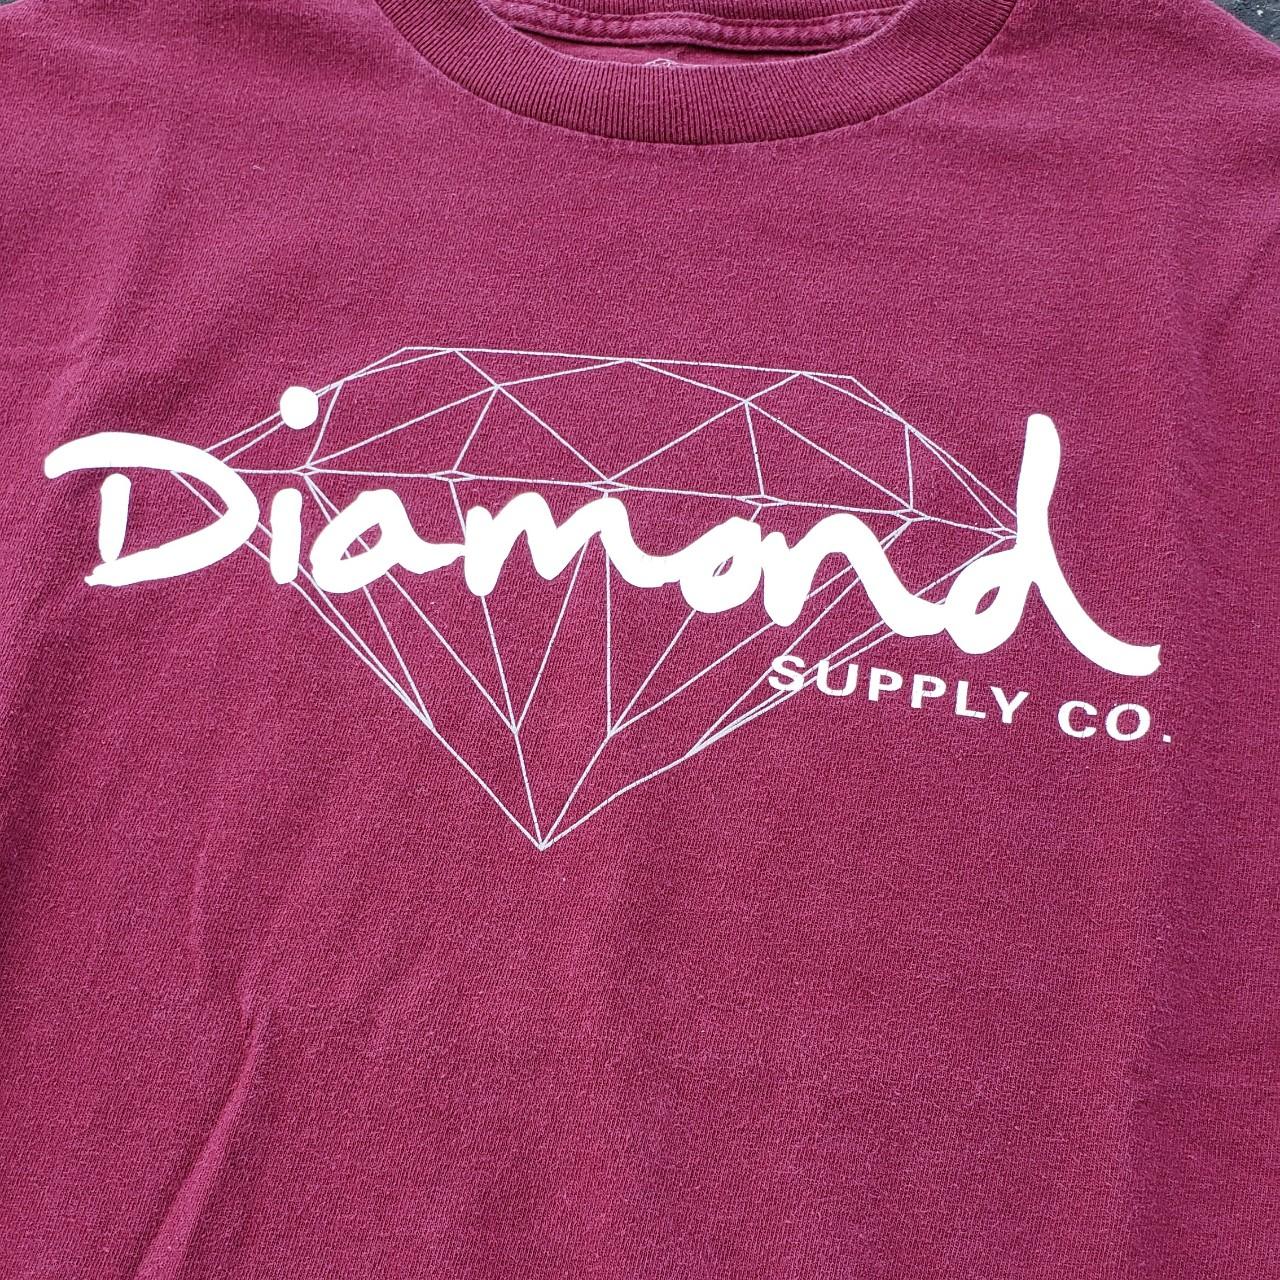 Diamond Supply Co. Men's Burgundy T-shirt (3)